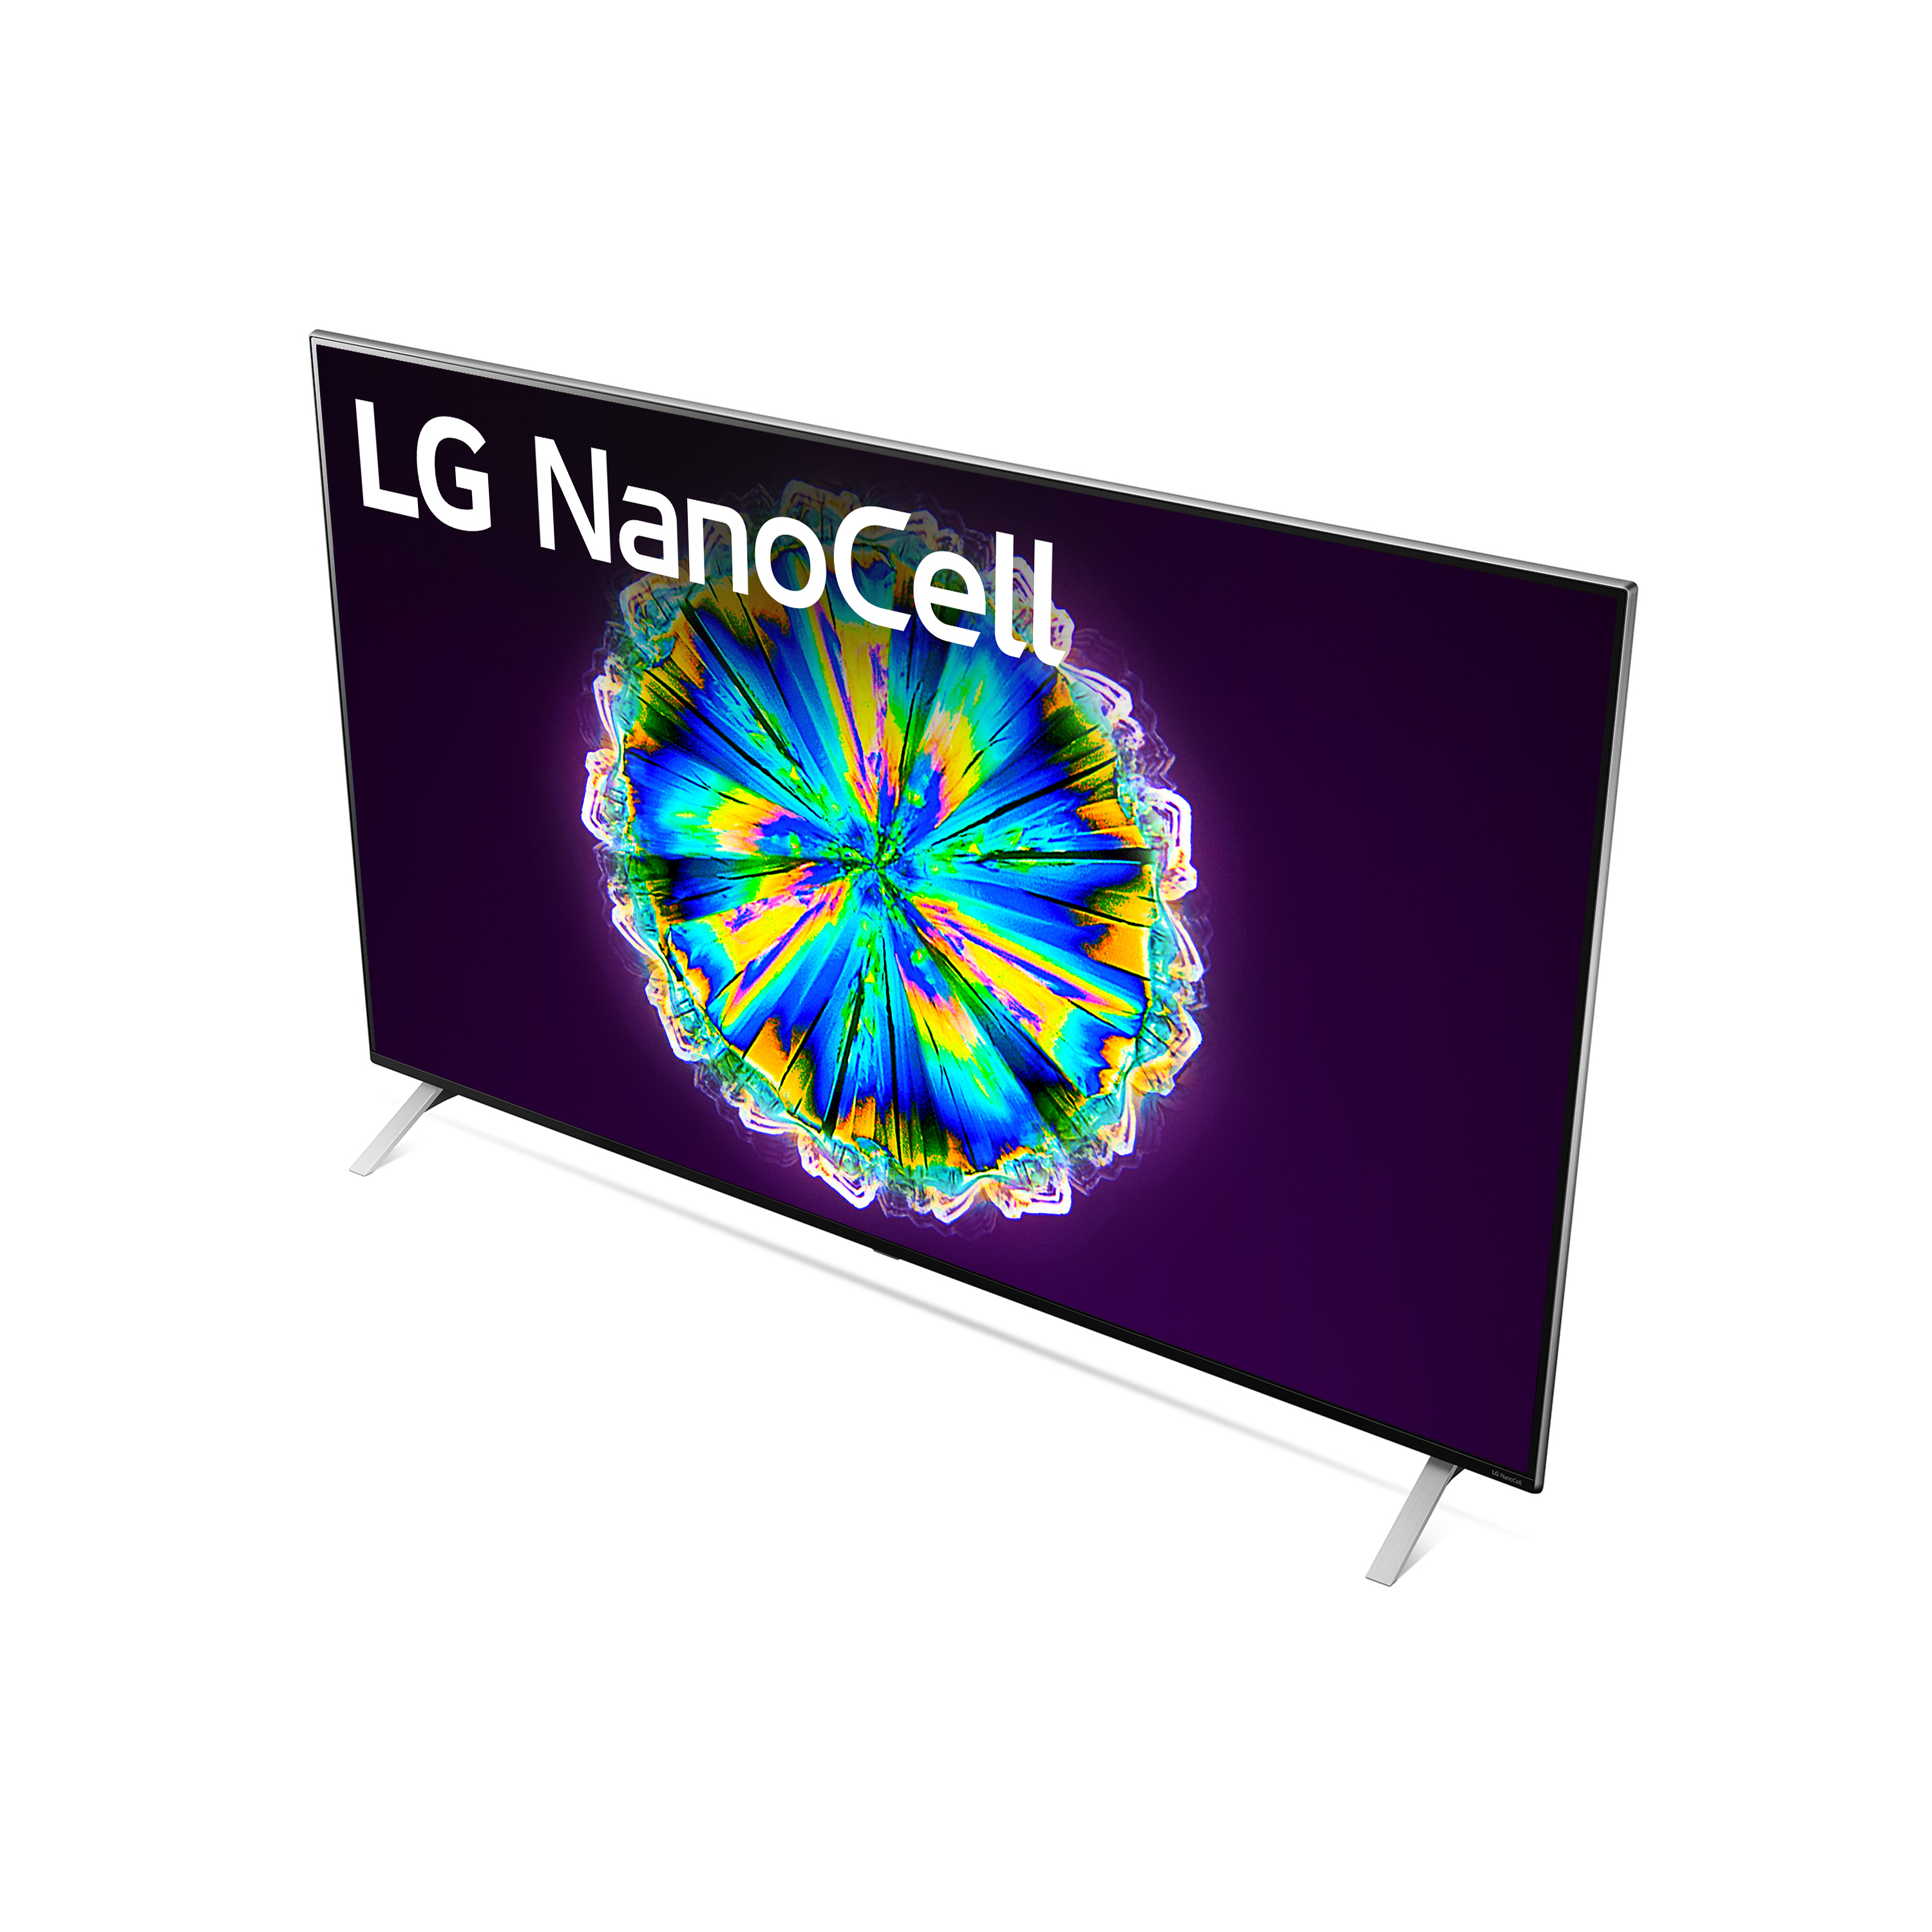 LG 65" Class 4K UHD 2160P NanoCell Smart TV with HDR 65NANO85UNA 2020 Model - image 3 of 38